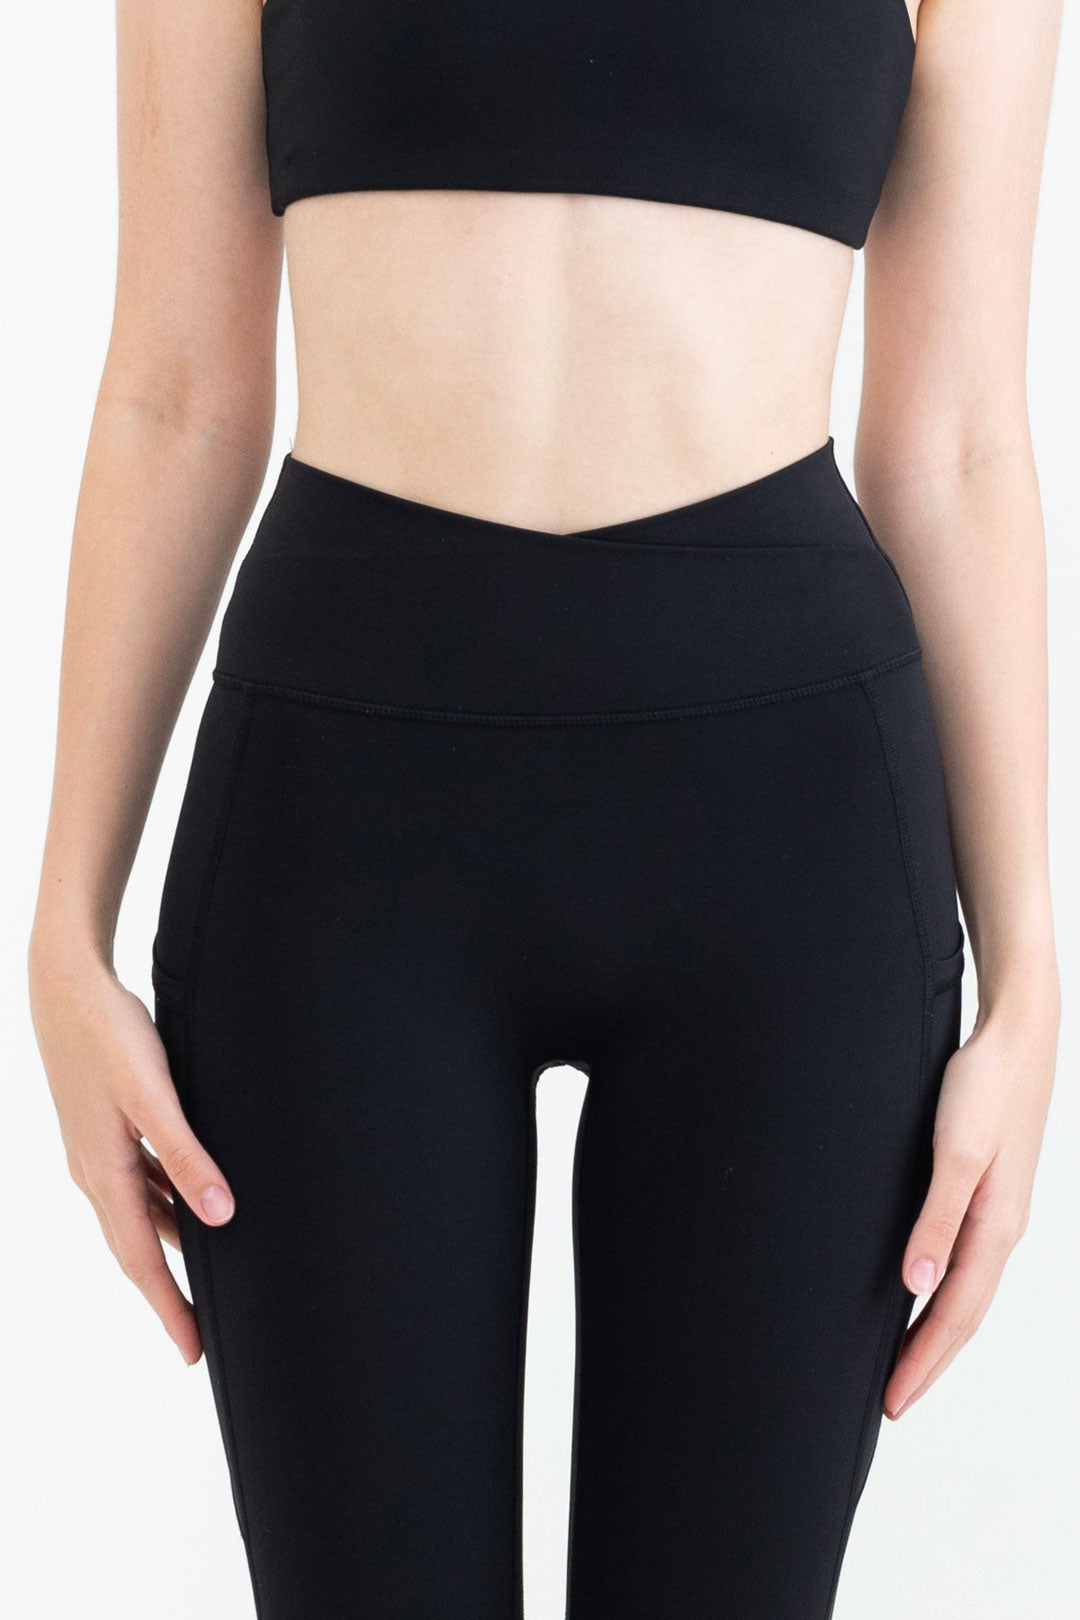 Press Loft  Image of Wellicious - Best Yoga Pants - Caviar Black